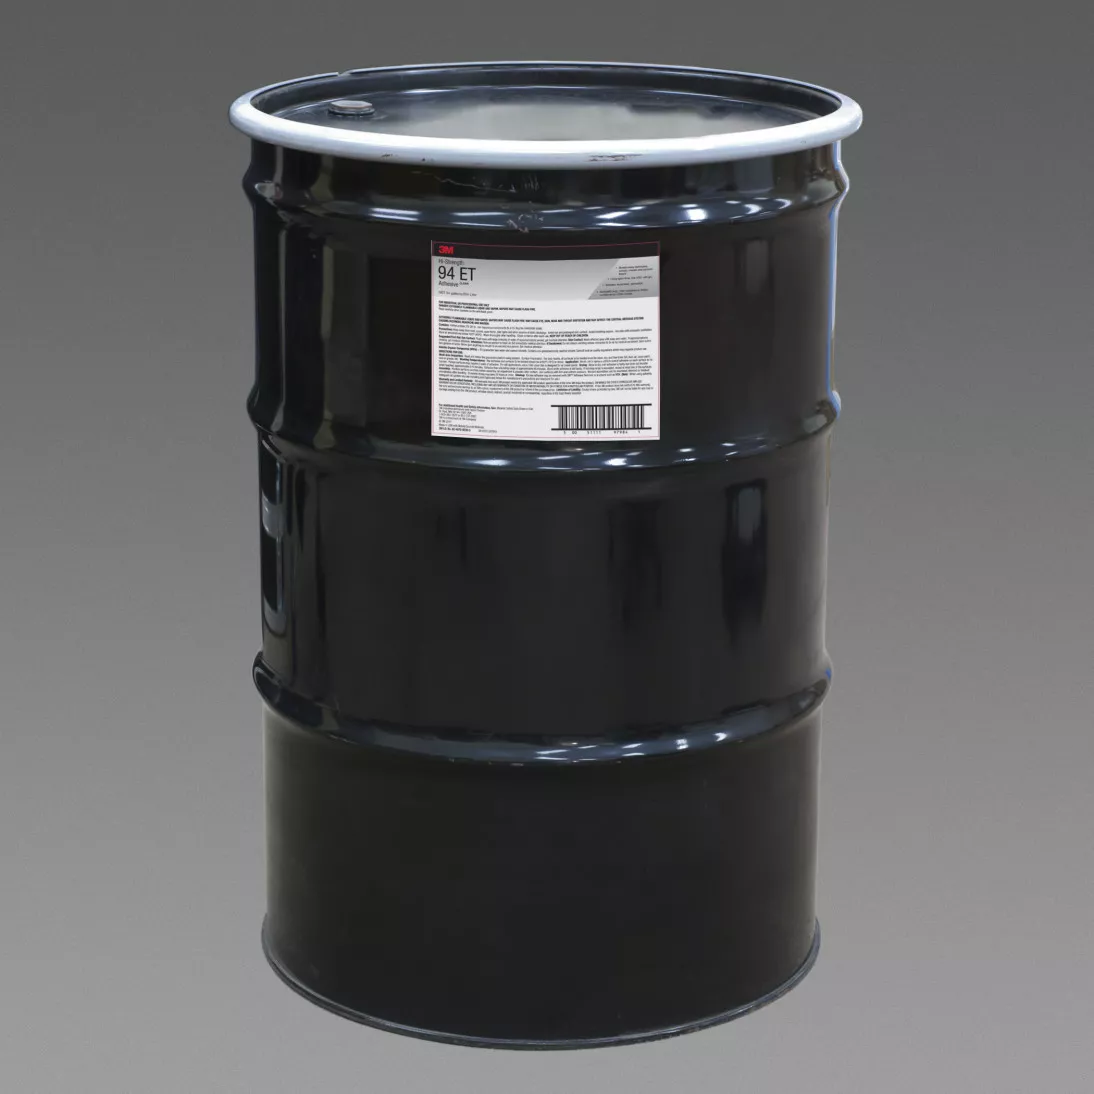 3M™ Hi-Strength 94 ET Adhesive, Clear, 55 Gallon Drum (54 Gallon Net)